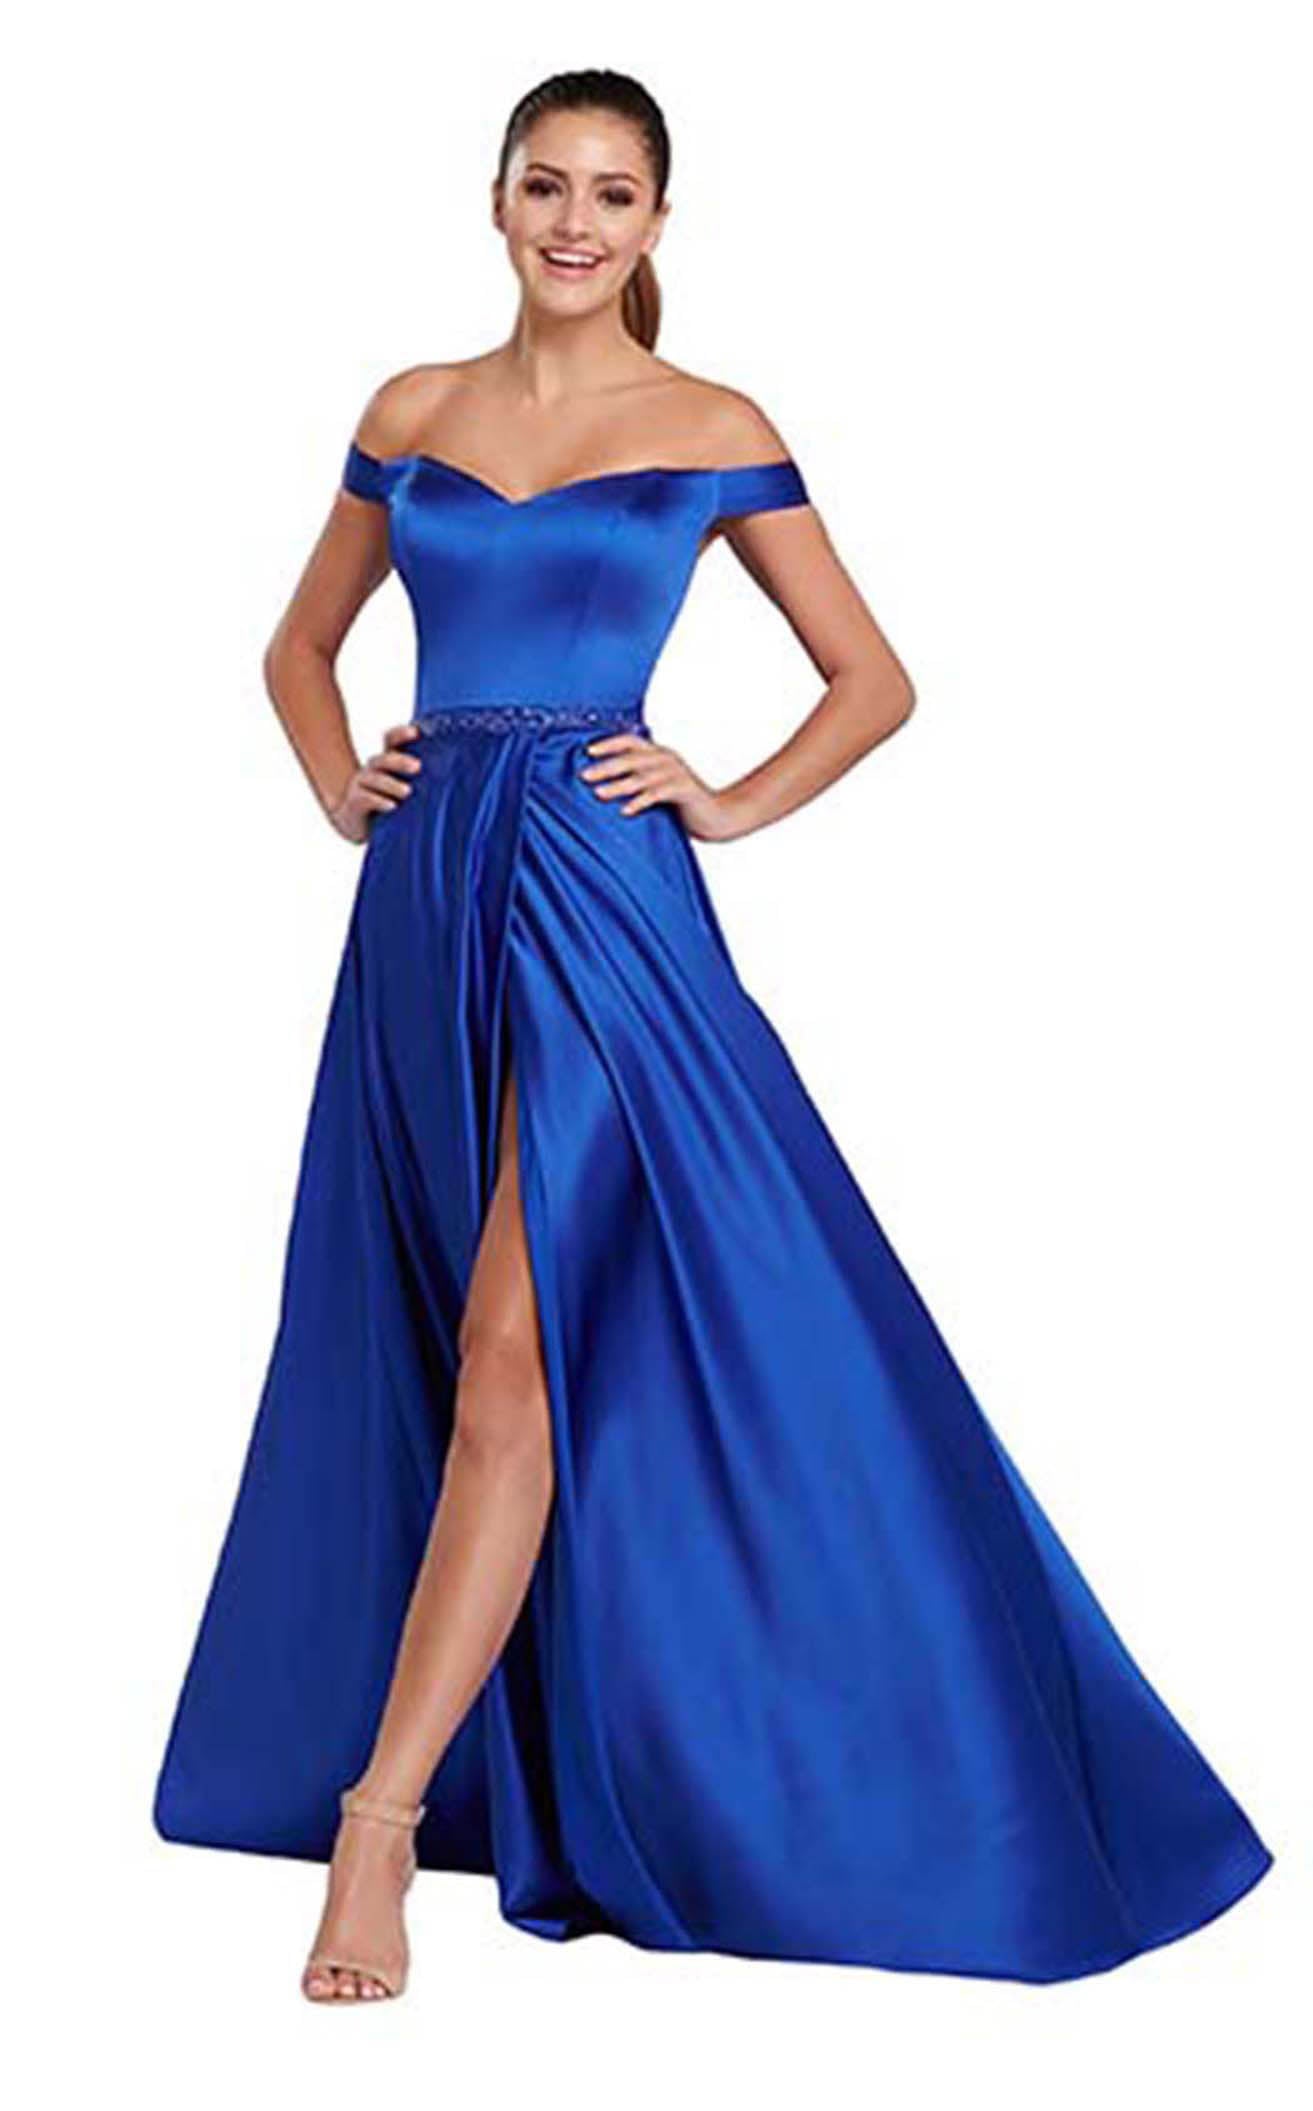 Ellie Wilde EW119053 Dress | Buy Designer Gowns & Evening Dresses ...